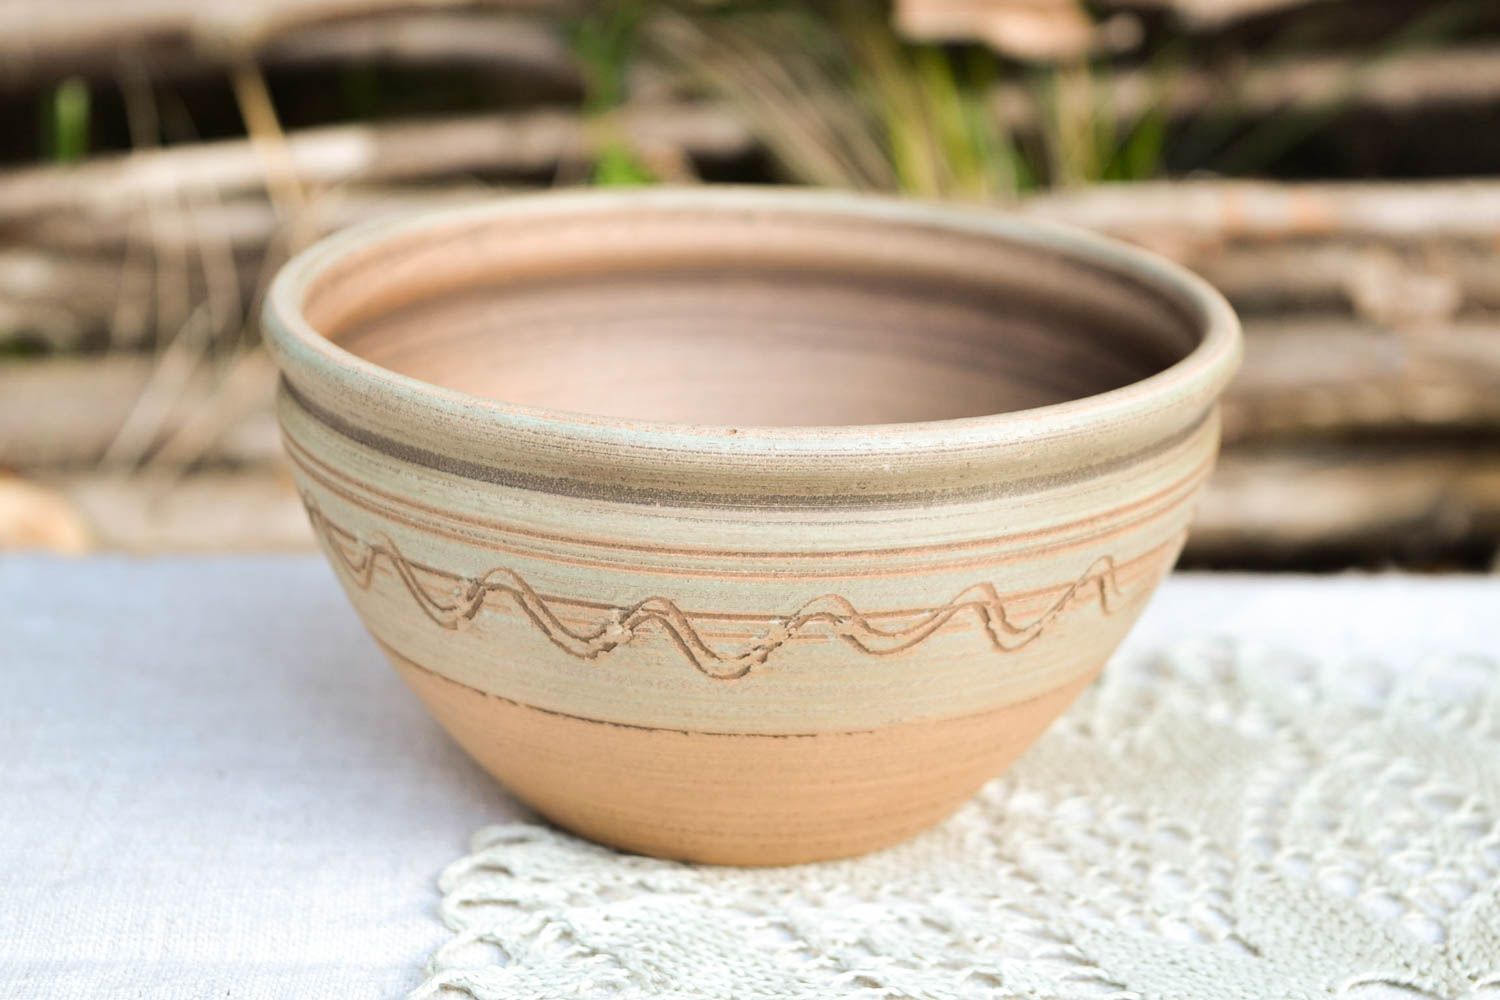 Eco friendly handmade ceramic bowl molded clay bowl kitchen supplies gift ideas photo 1